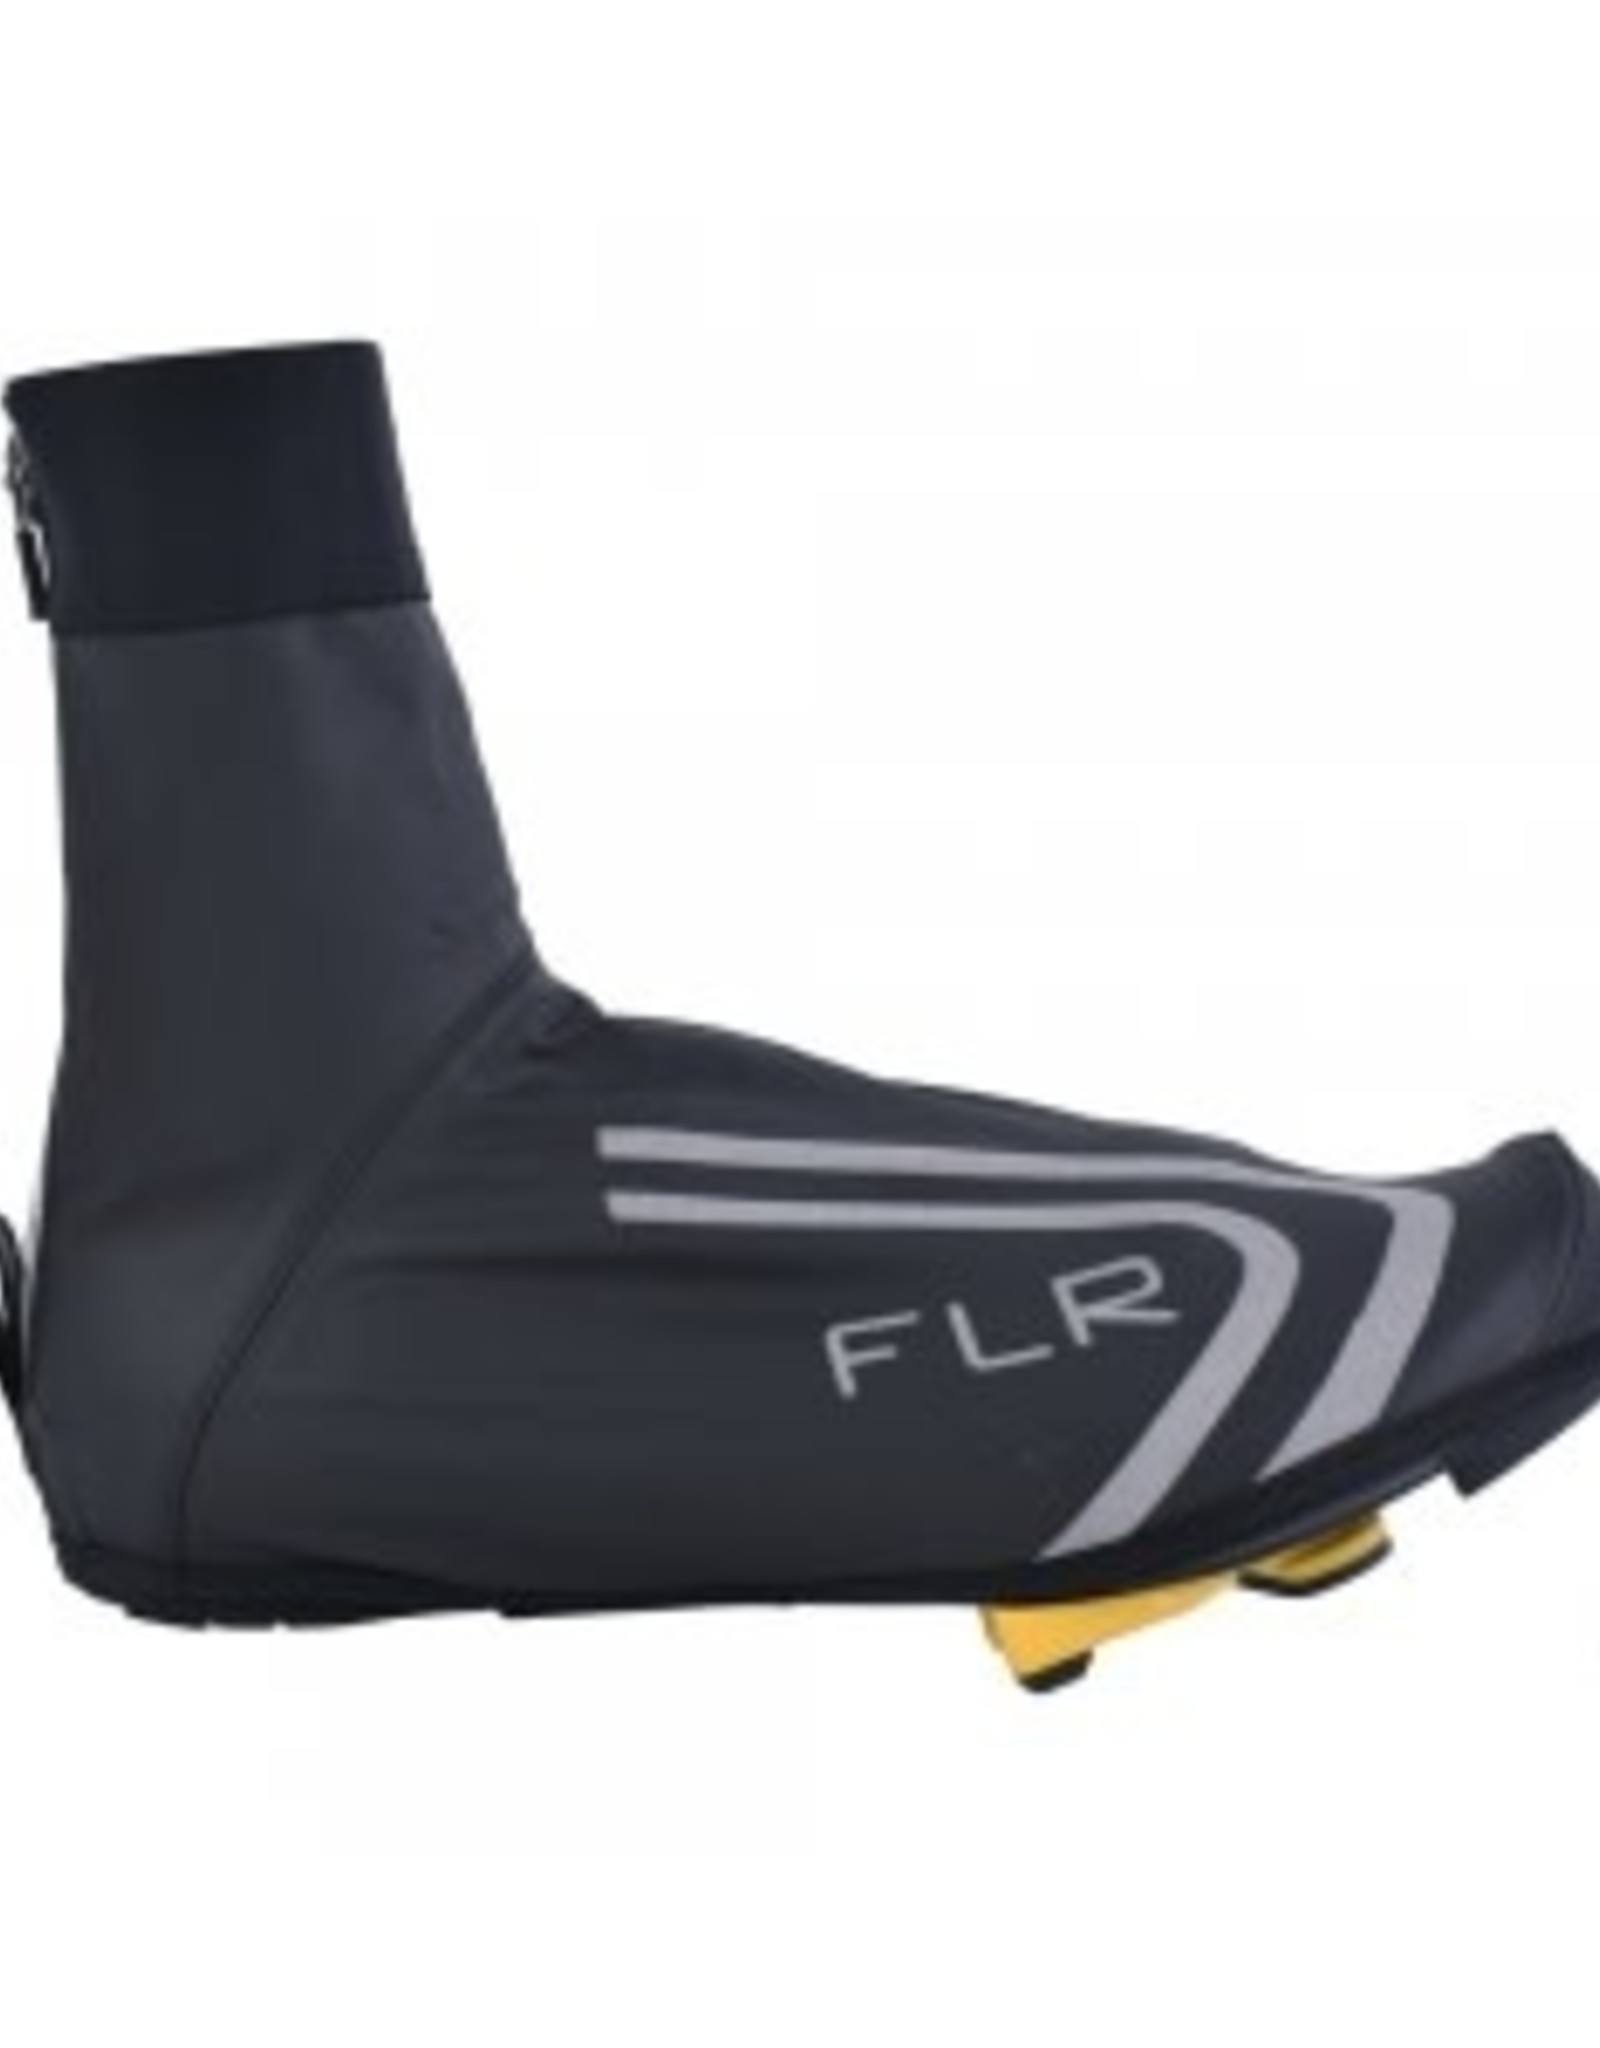 FLR Shoes FLR LW2 Windproof & Waterproof Overshoe in Black